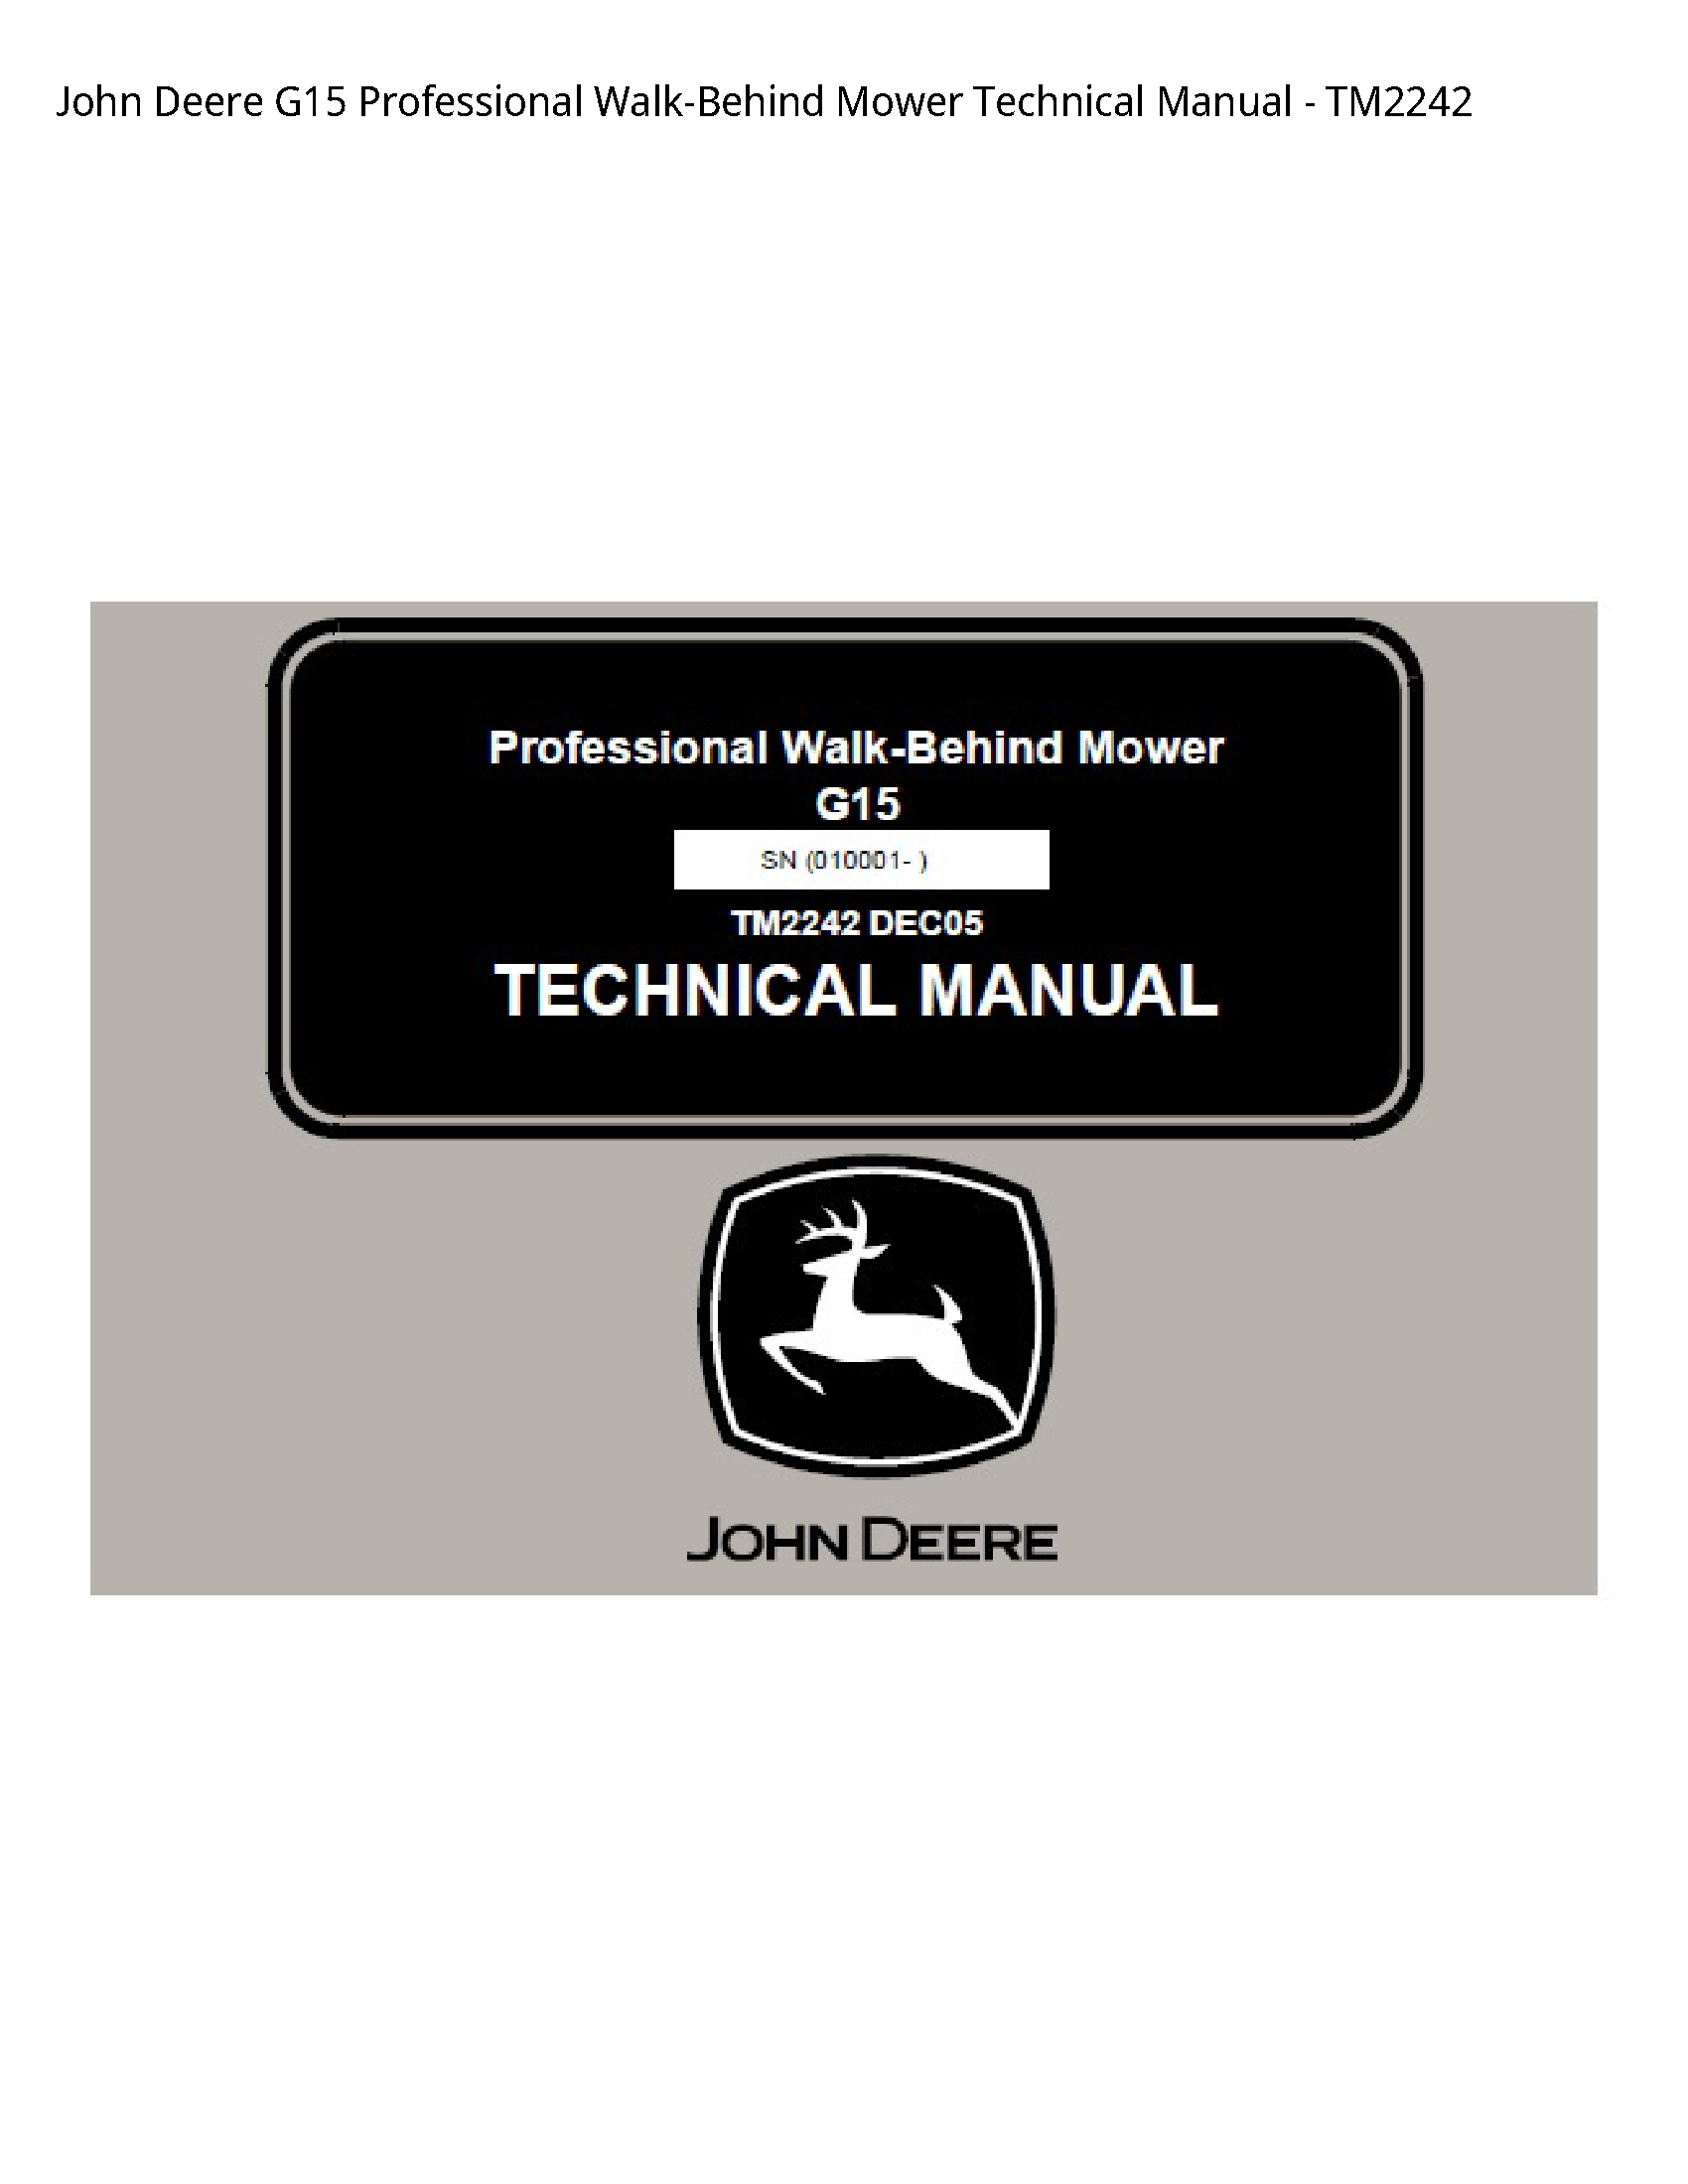 John Deere G15 Professional Walk-Behind Mower Technical manual